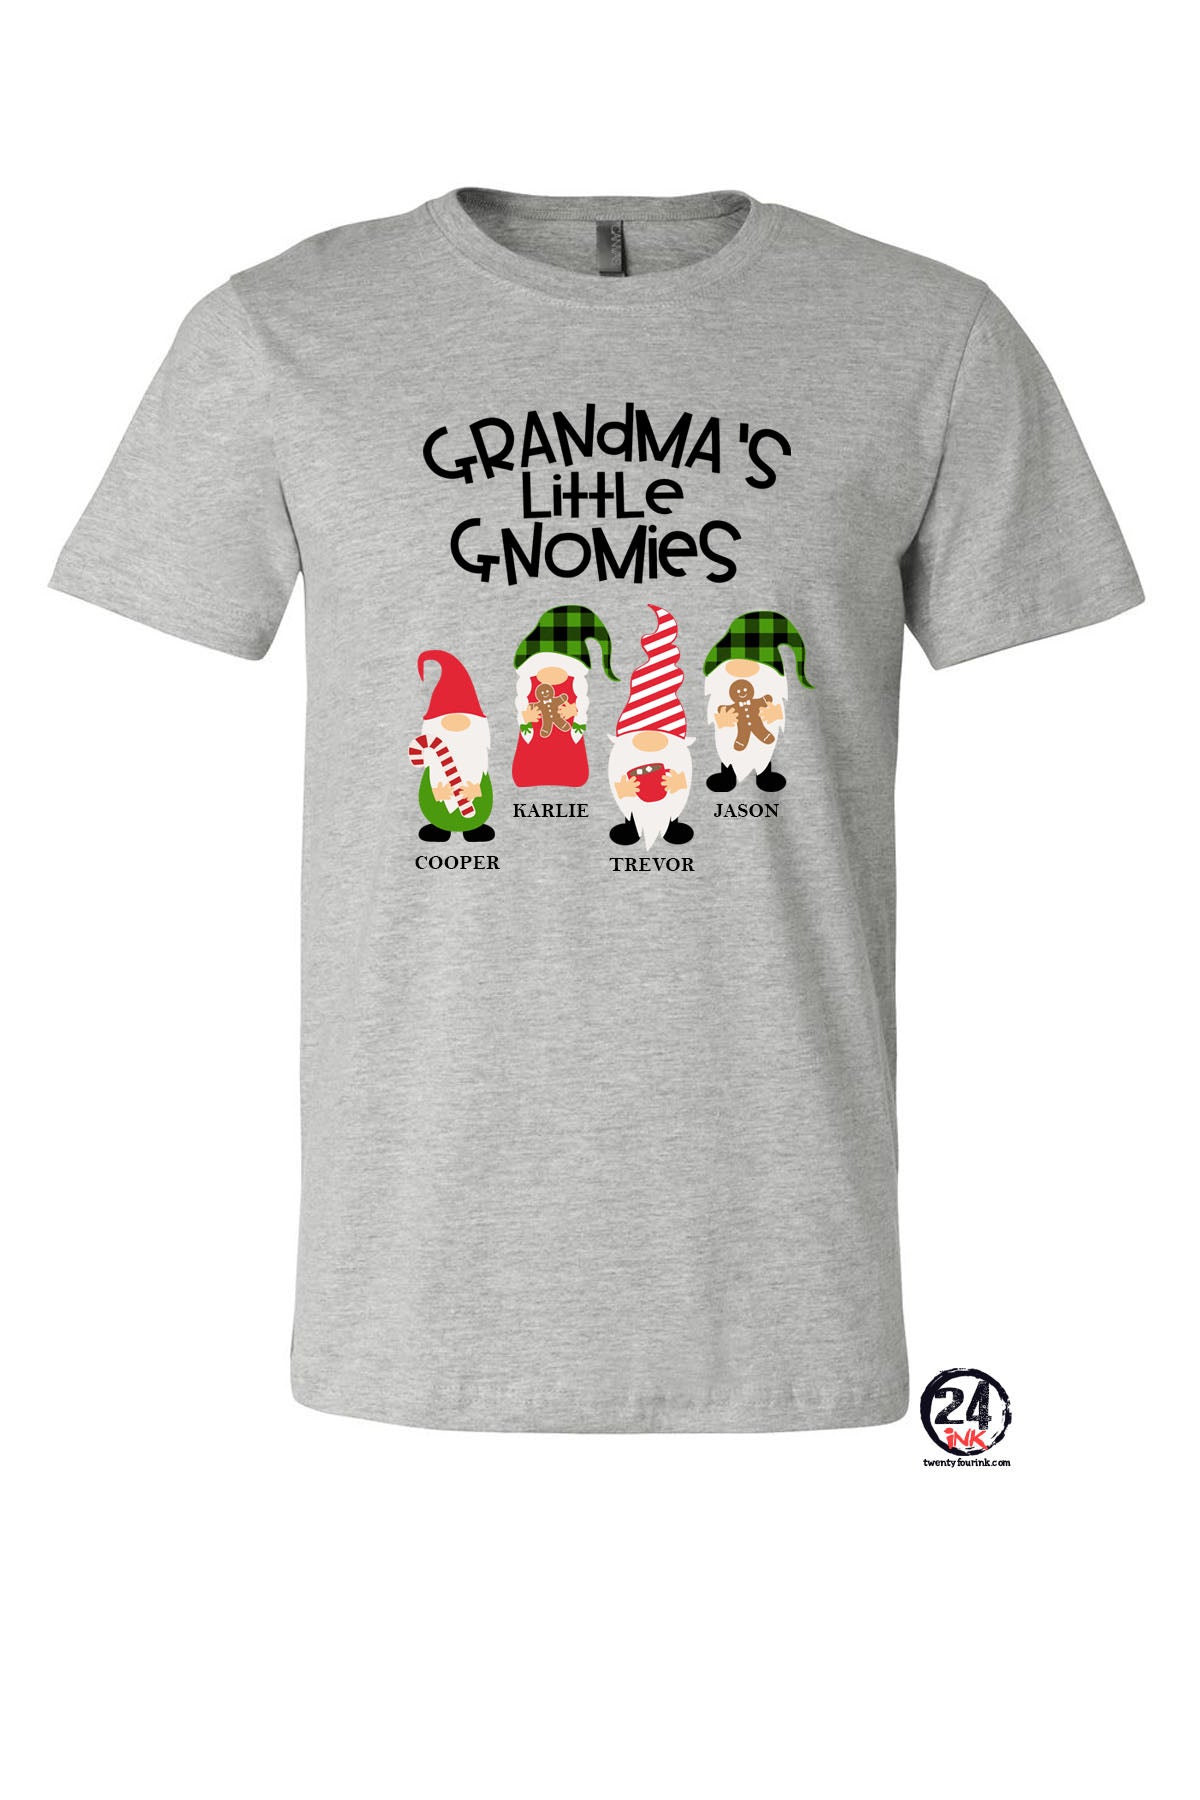 Grandma's little gnomies T-Shirt